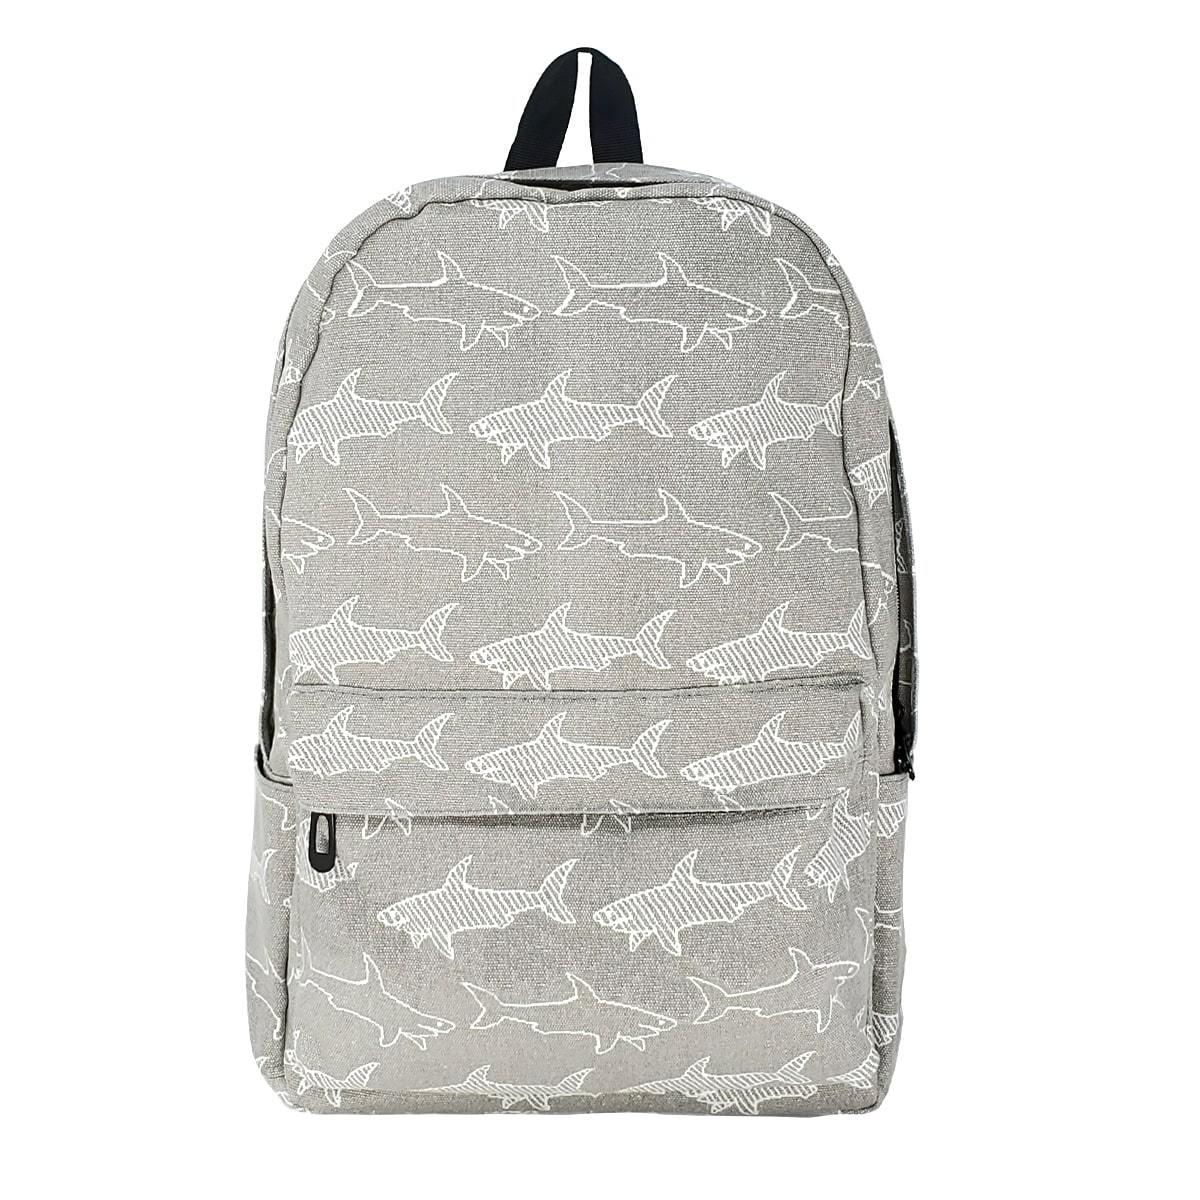 Great White Shark Backpack, Front | Pakapalooza